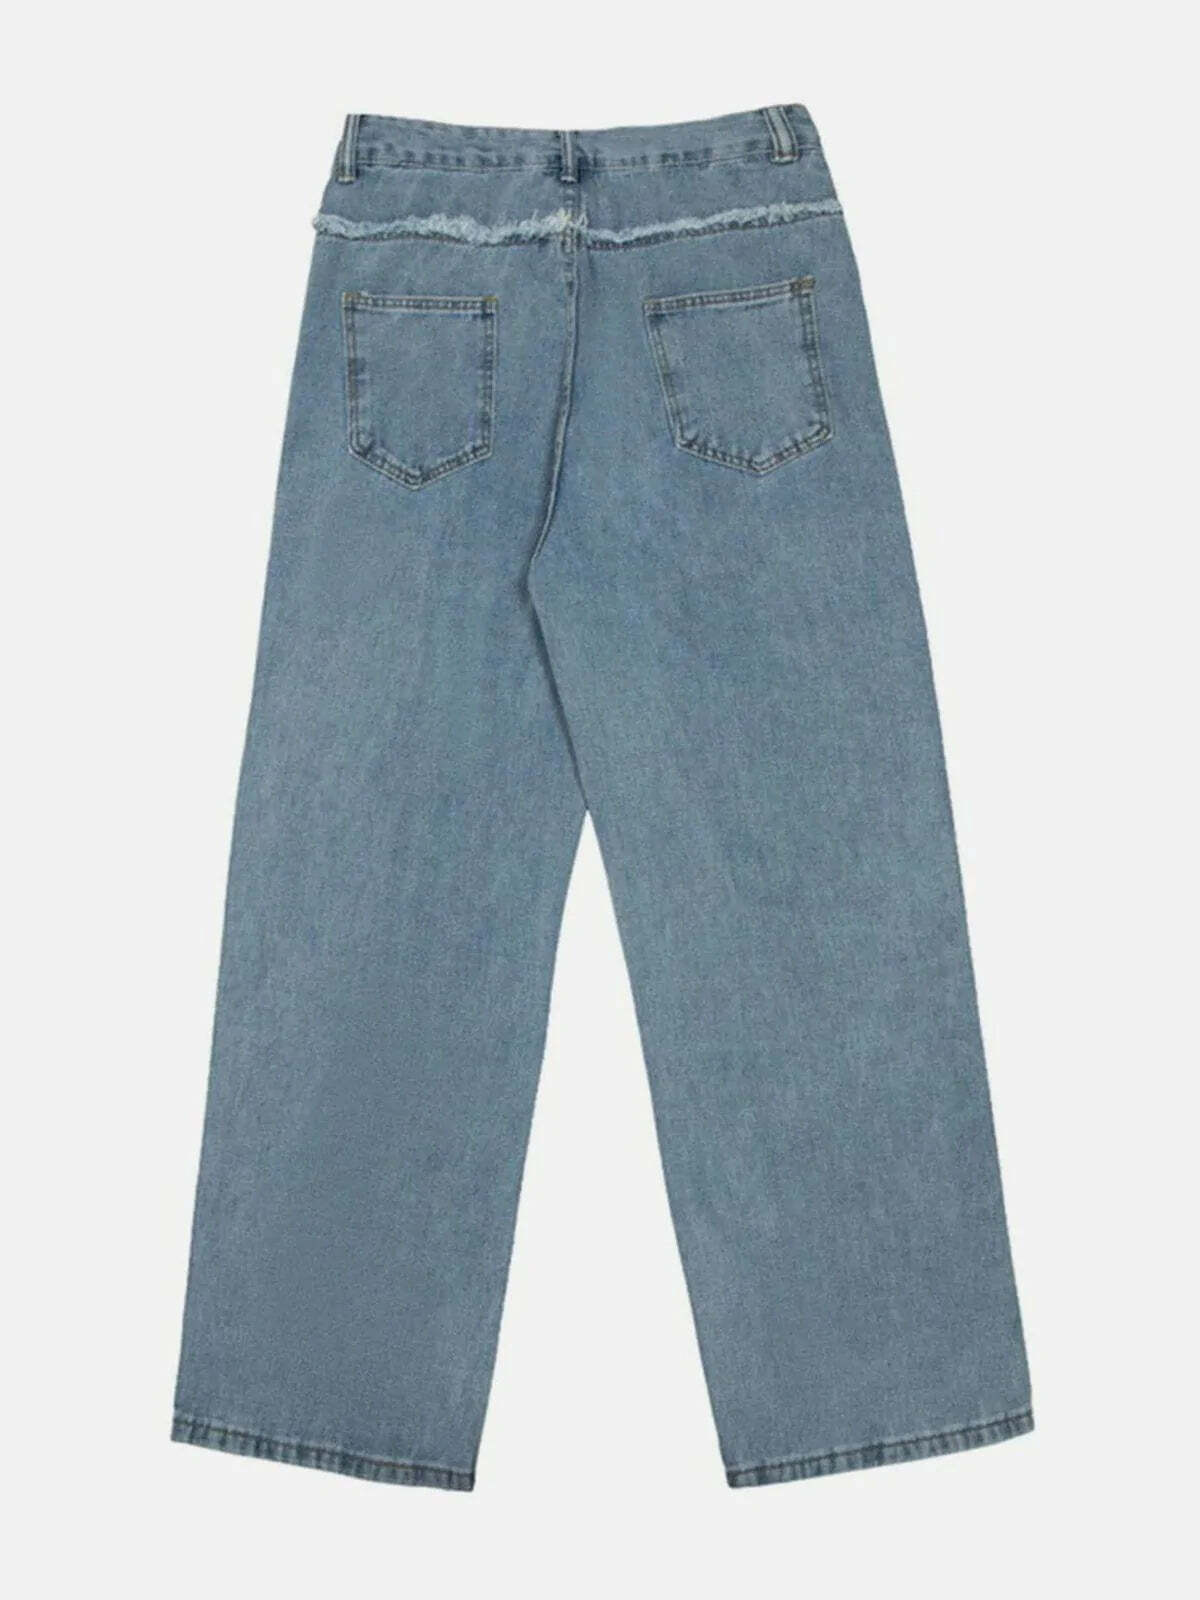 patchwork design jeans edgy & retro streetwear 7291